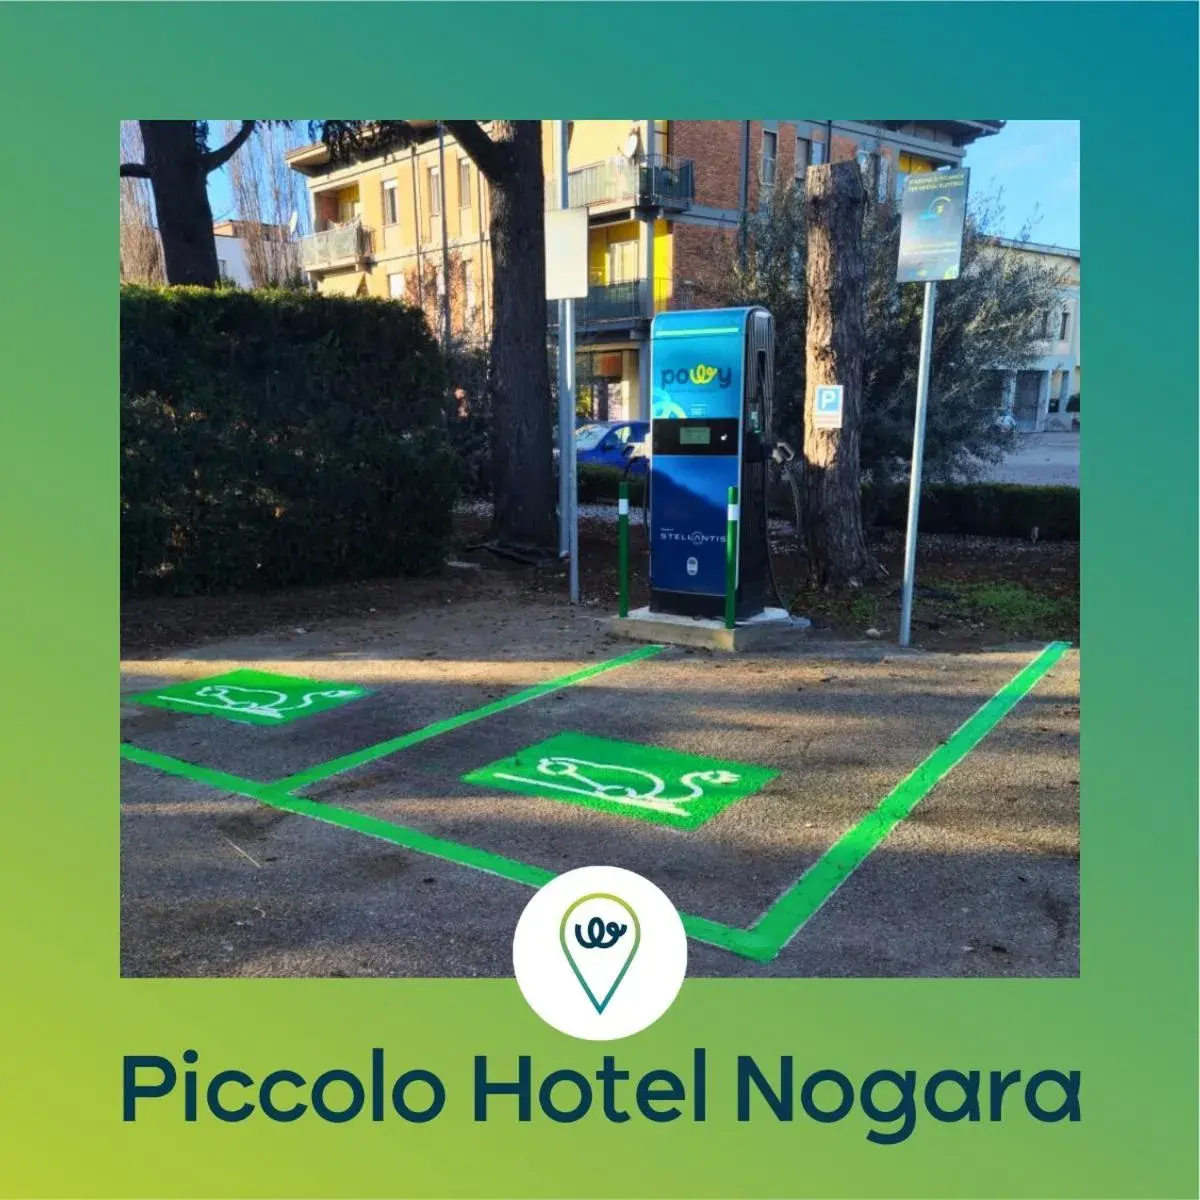 Logo/Certificate/Sign in Piccolo Hotel Nogara